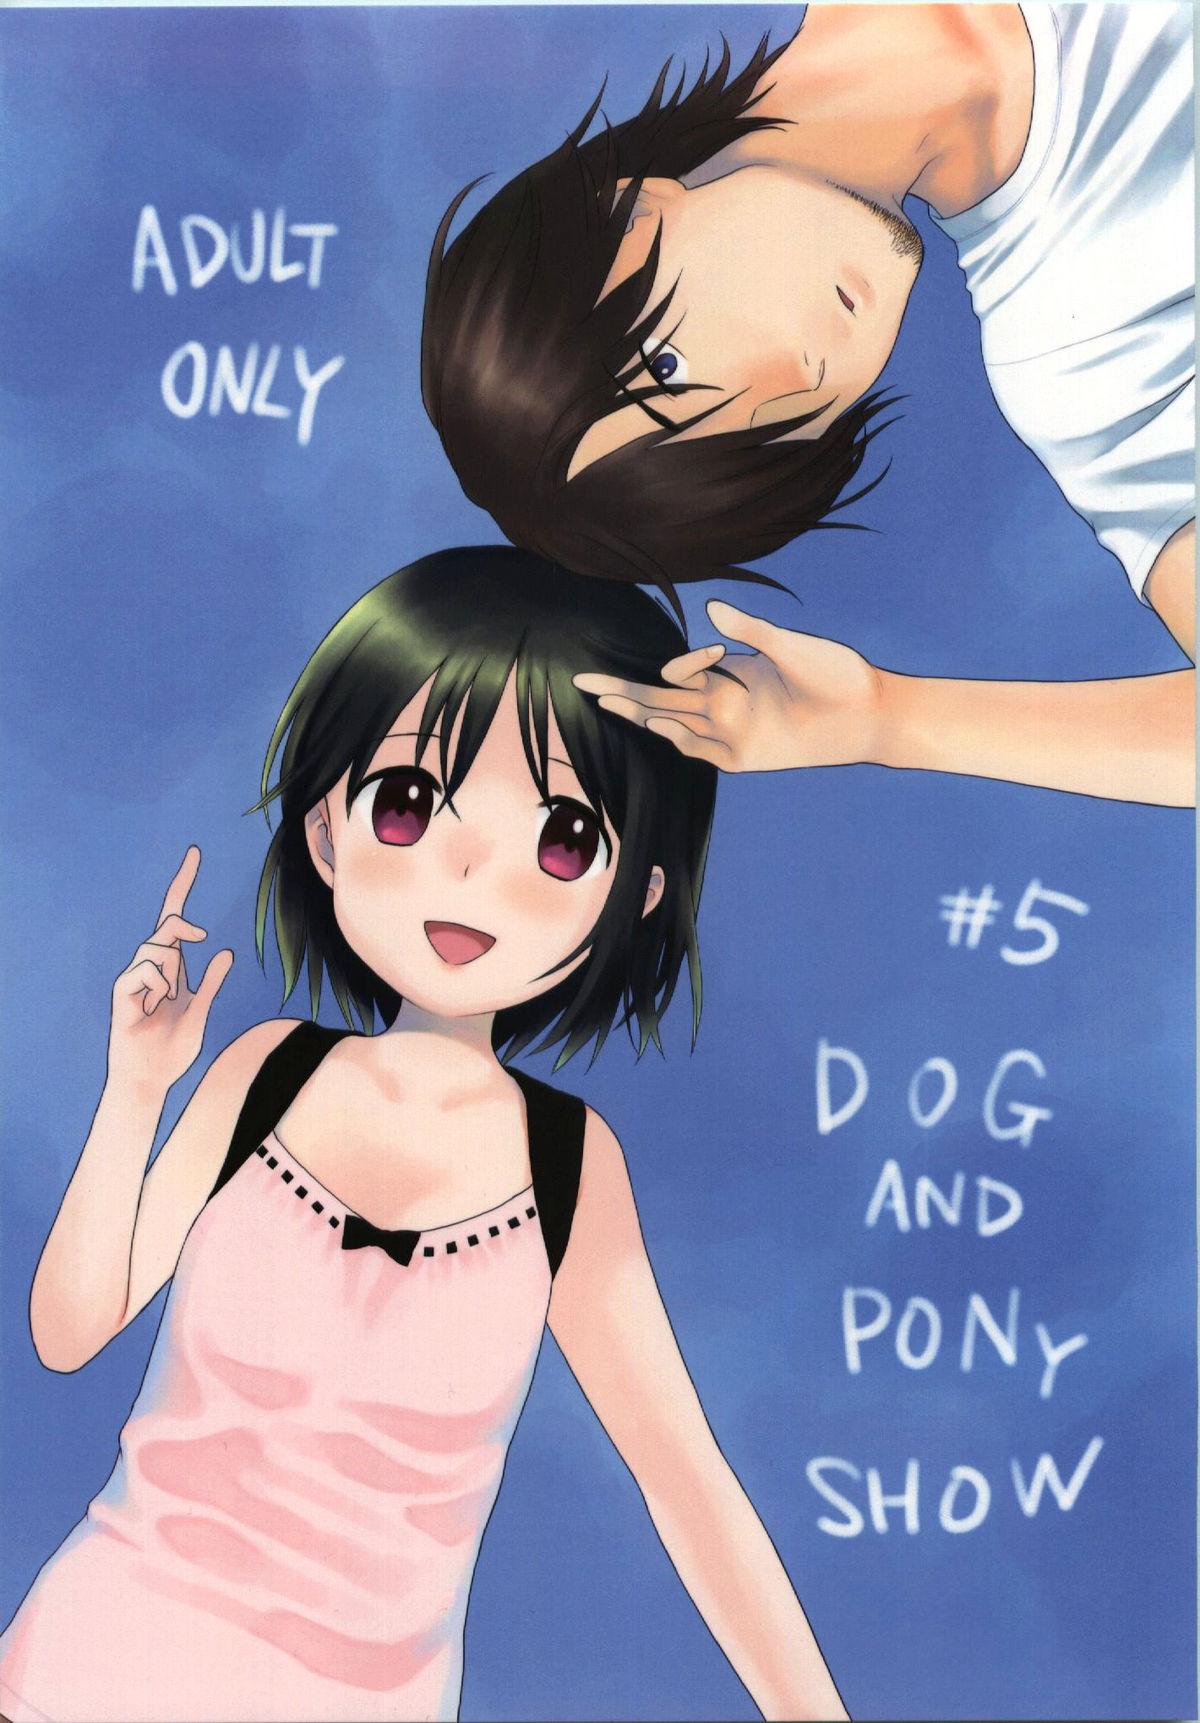 Dog and Pony SHOW #5 0